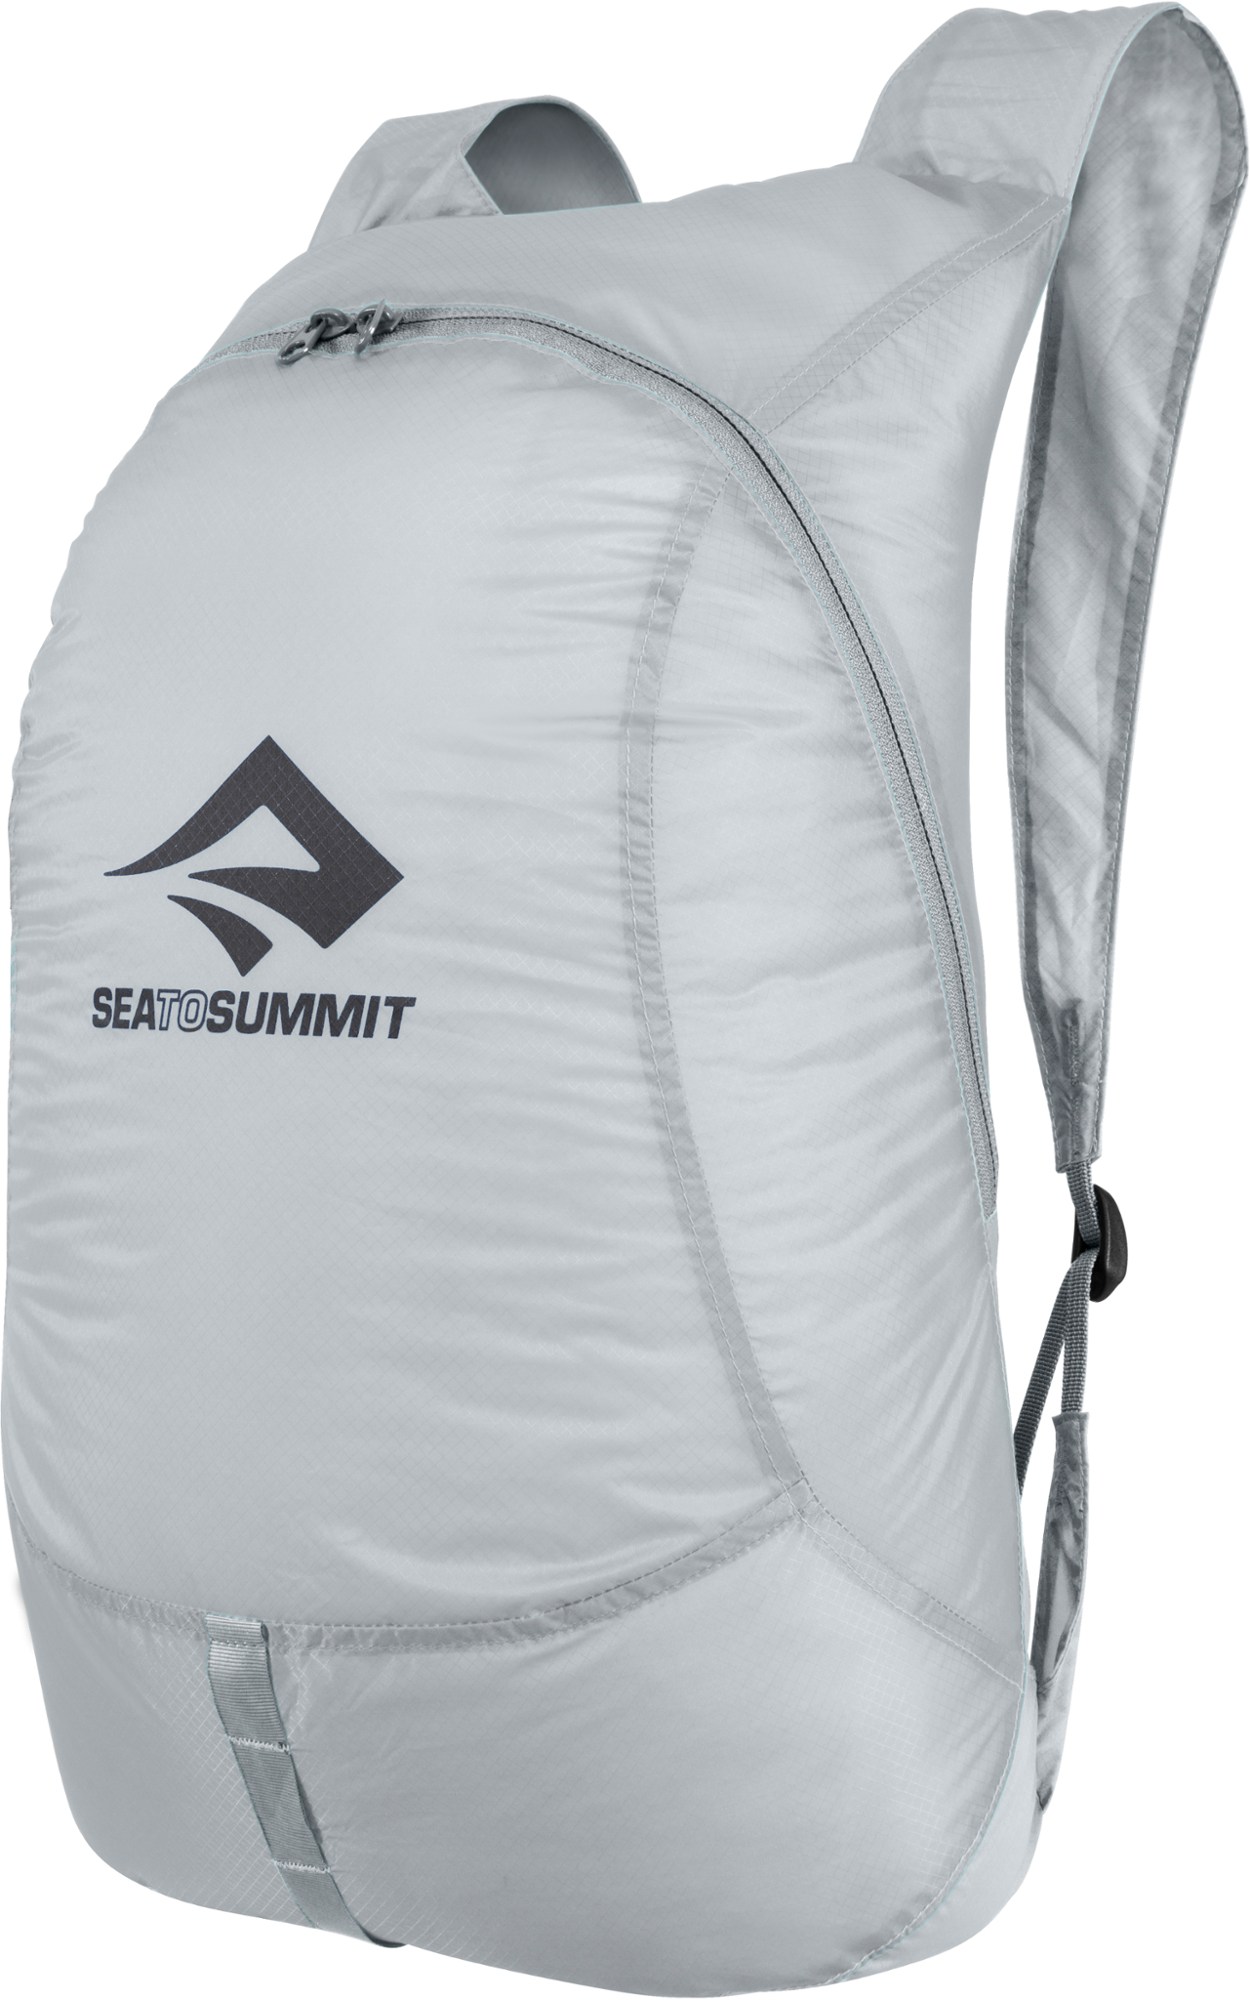 Дневной пакет Ultra-Sil Travel Sea to Summit, серый